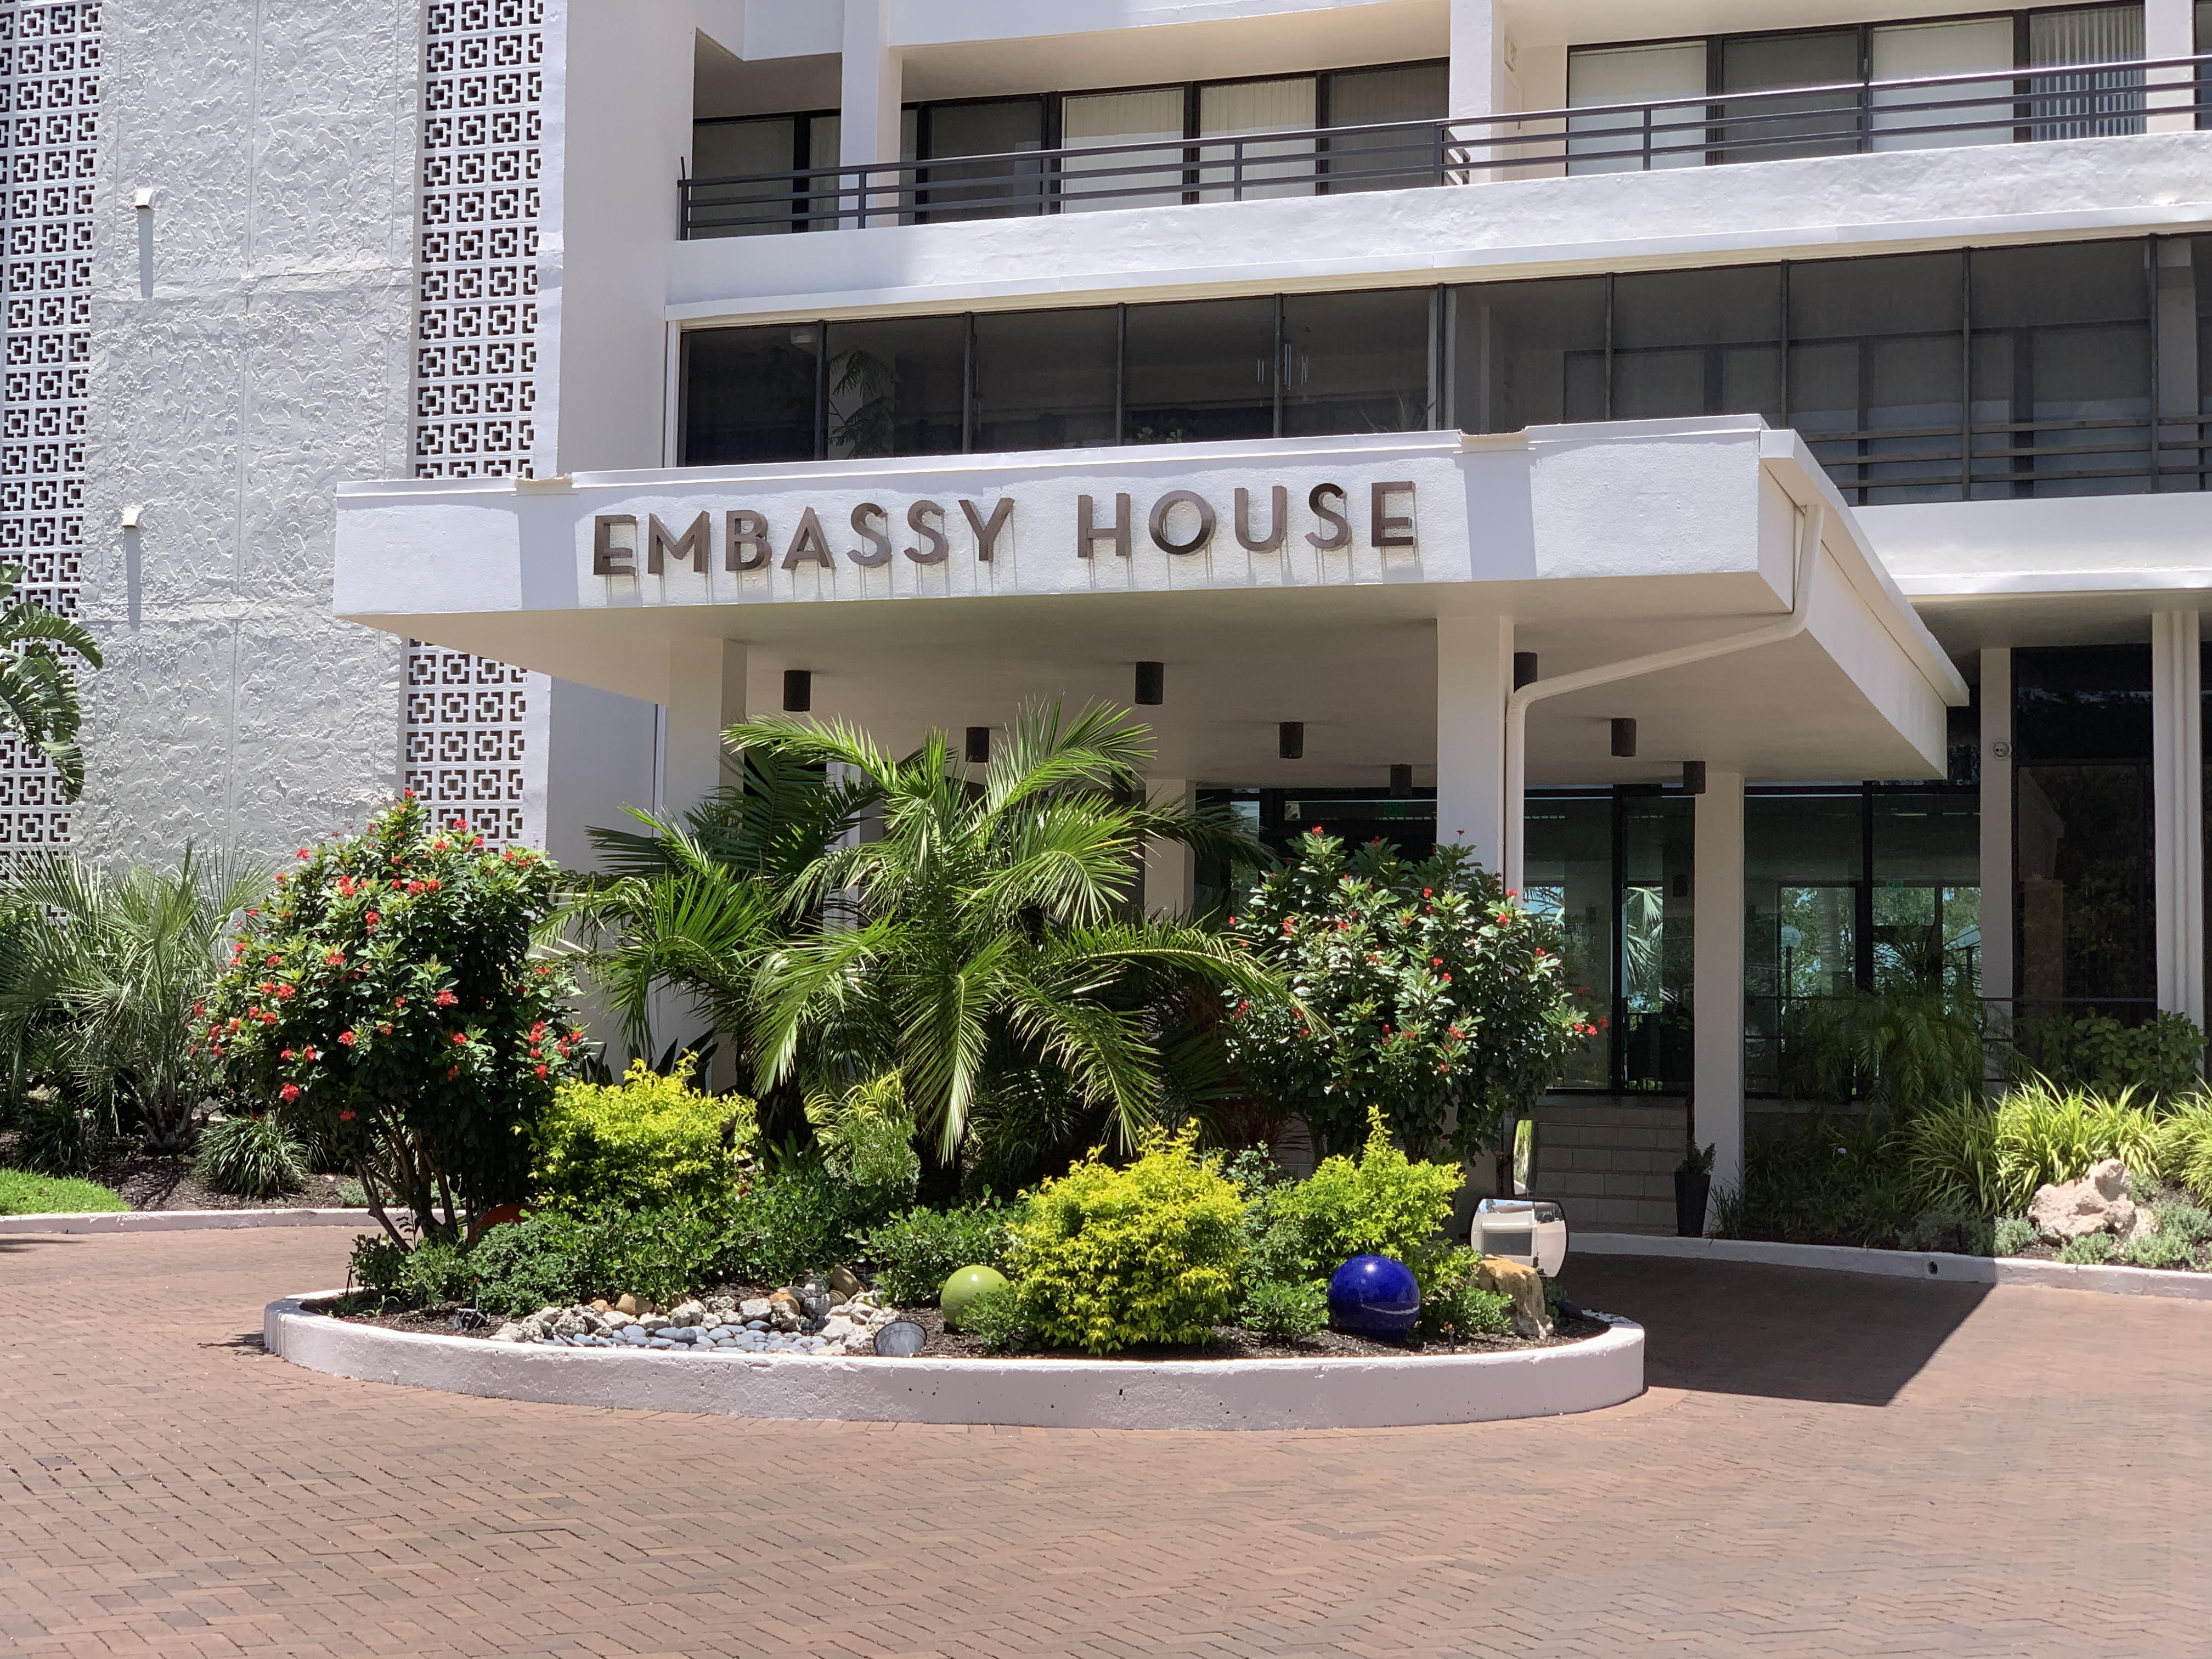 Embassy house